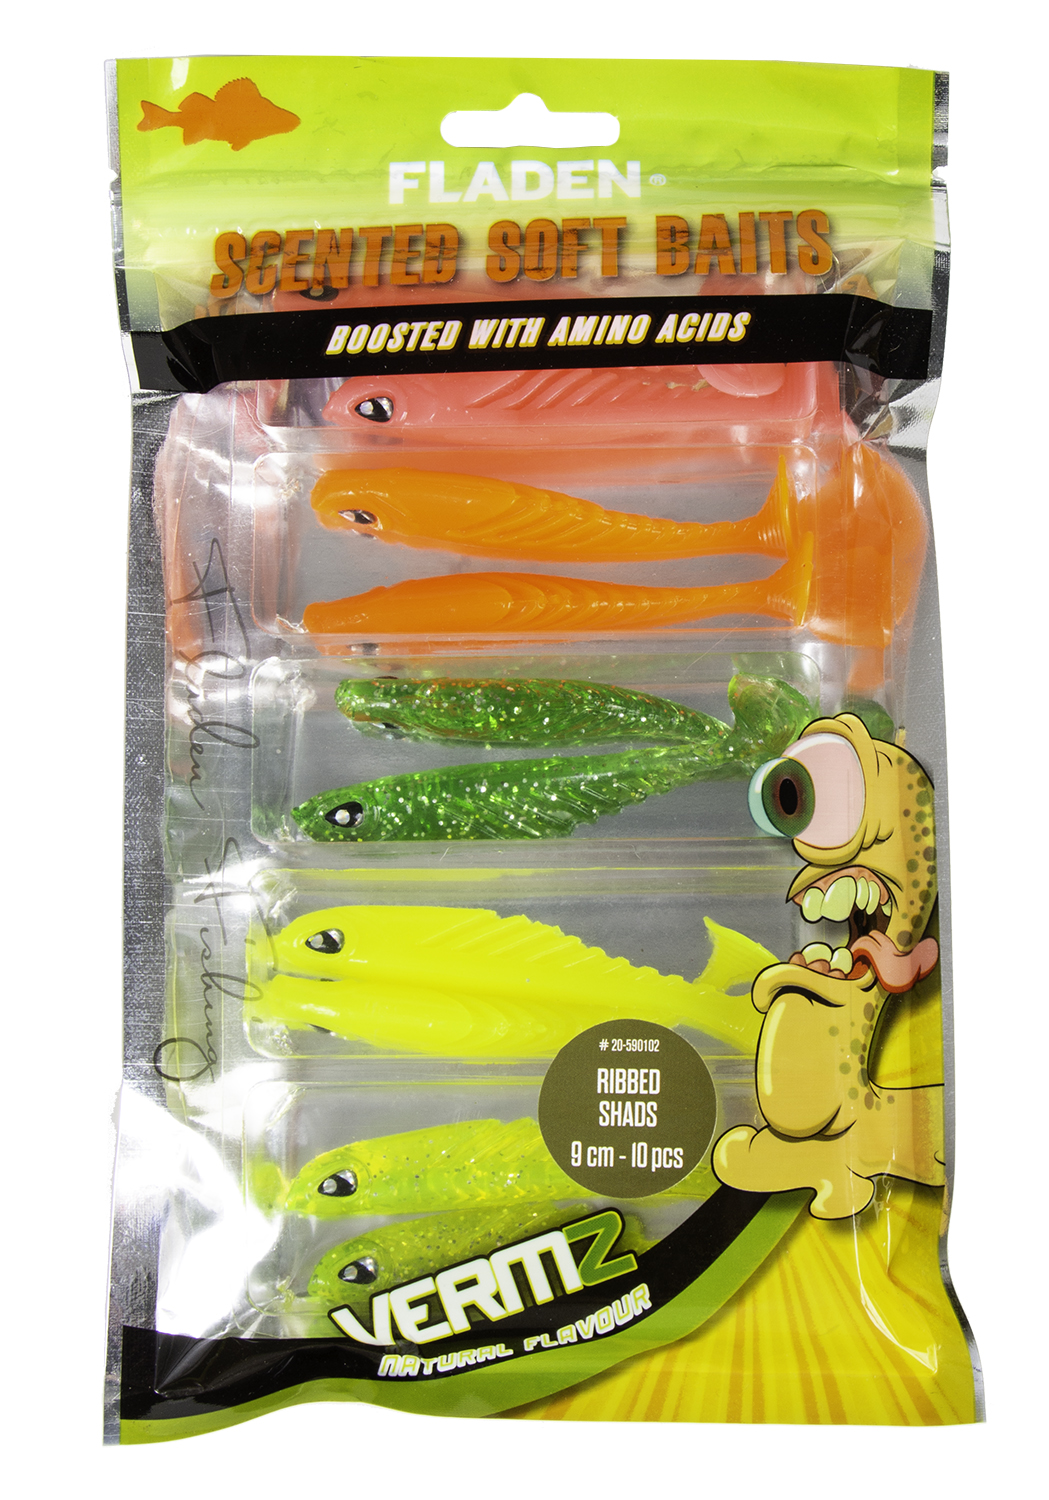 https://cdn.fishingmegastore.com/hires/fladen/vermz-scented-soft-ribbed-shads-pack.jpg